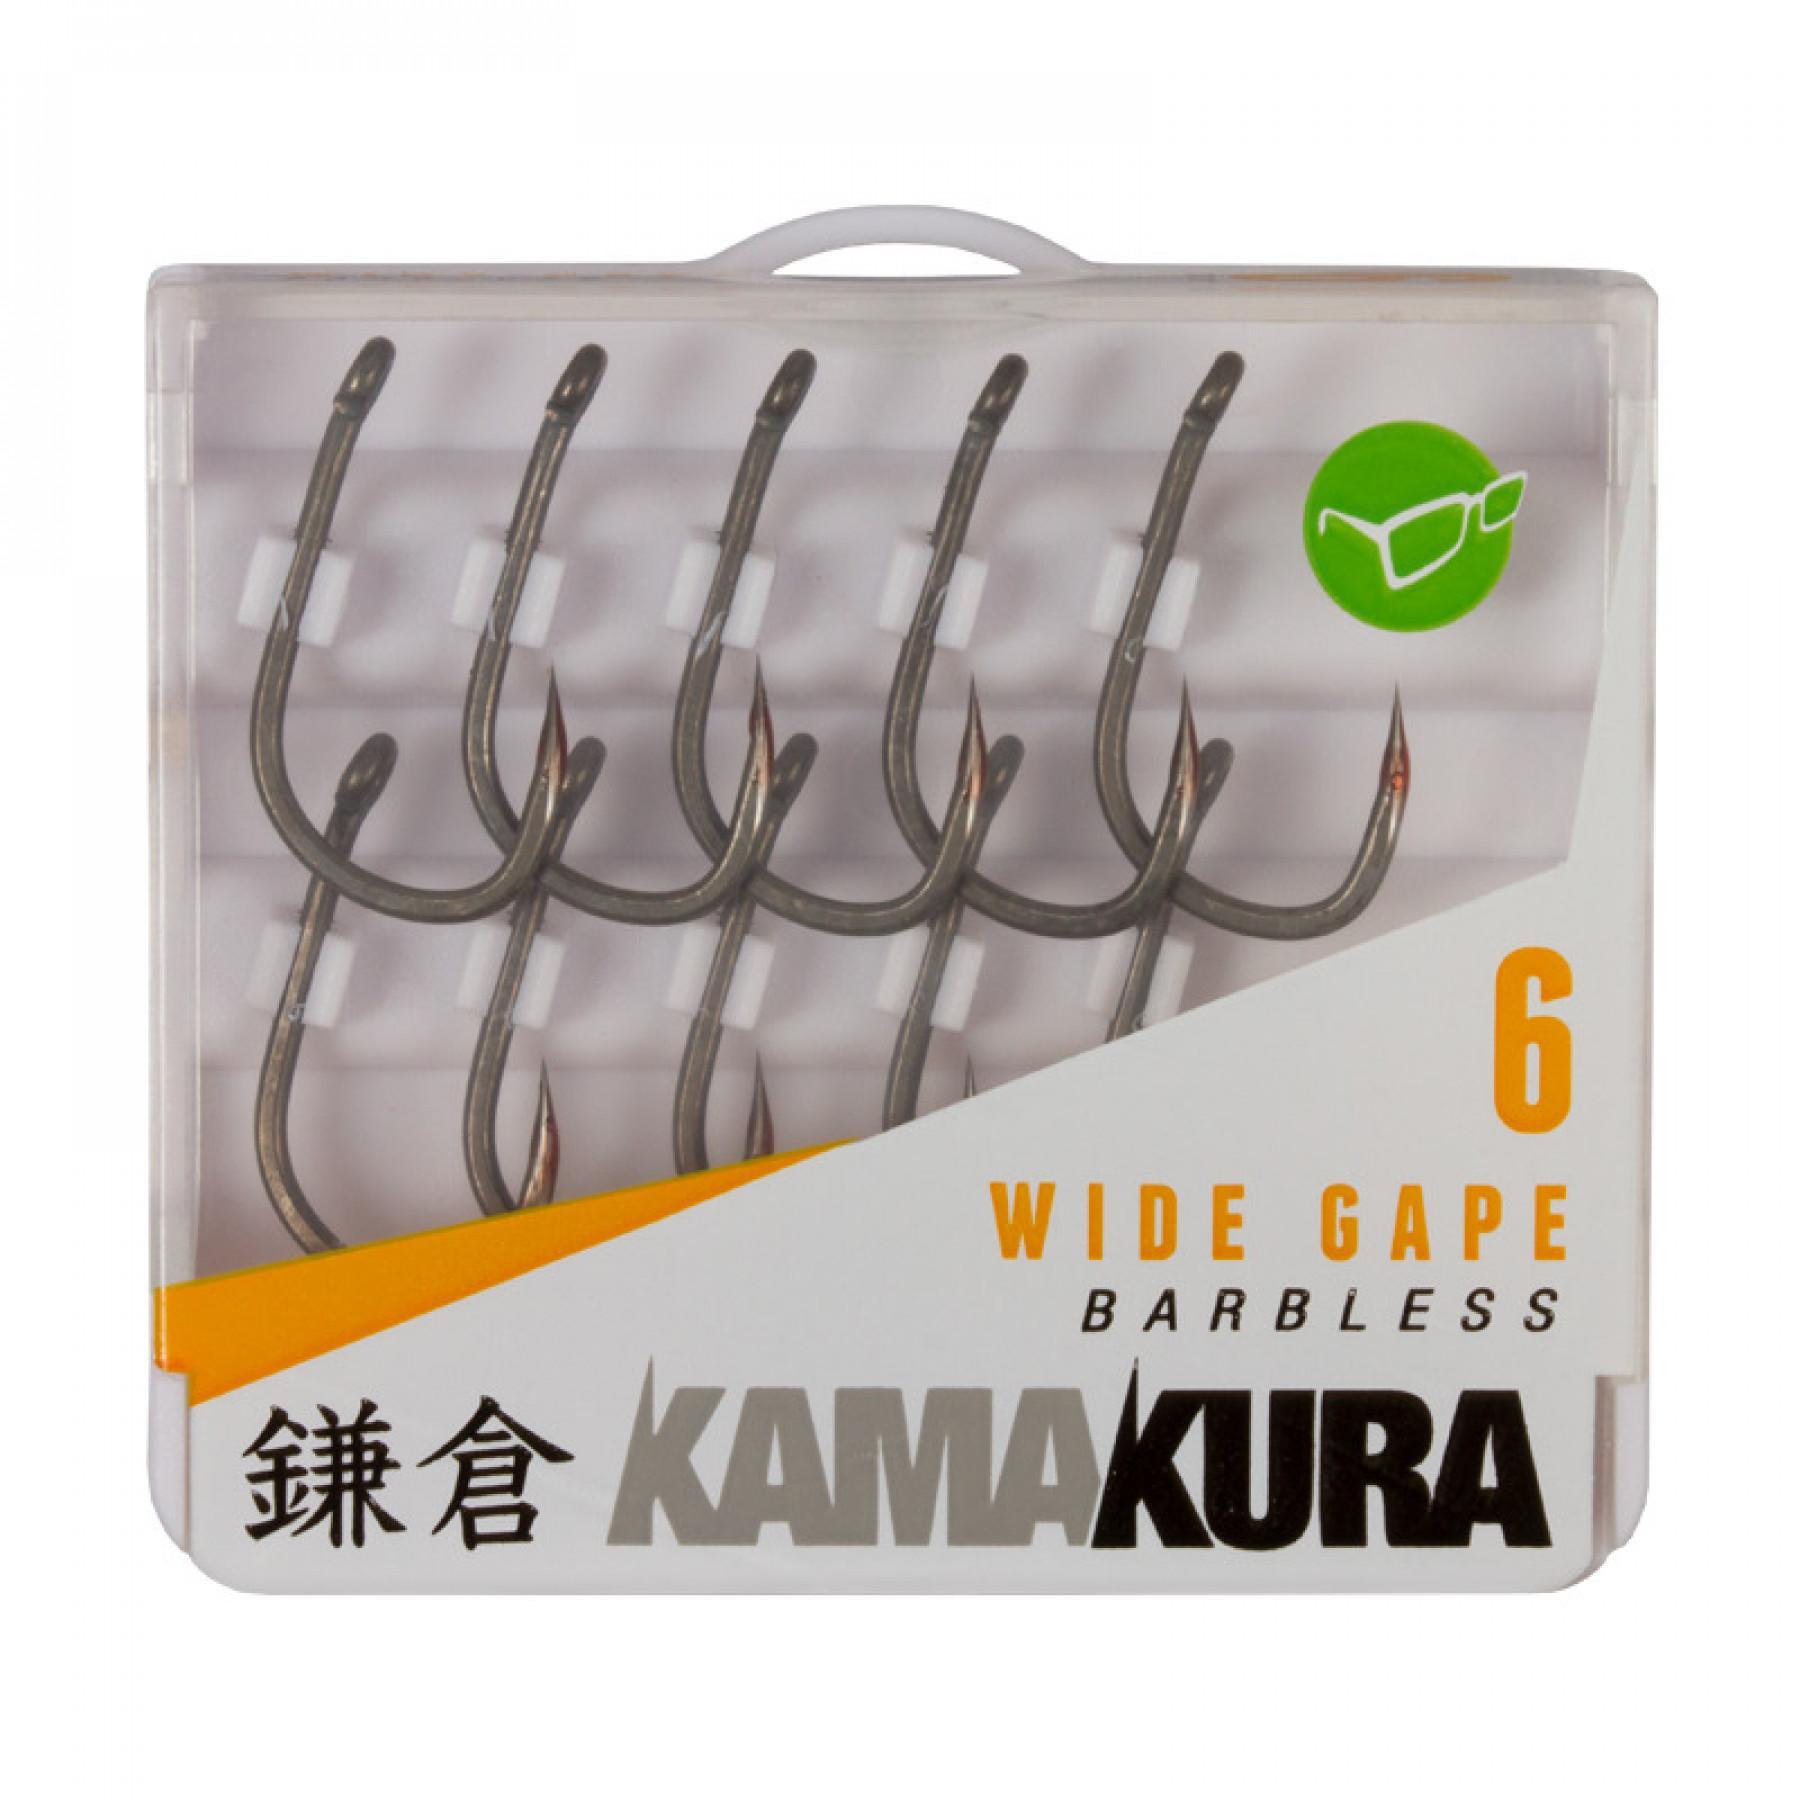 Anzuelo korda Kamakura Wide Gape Barbless S6